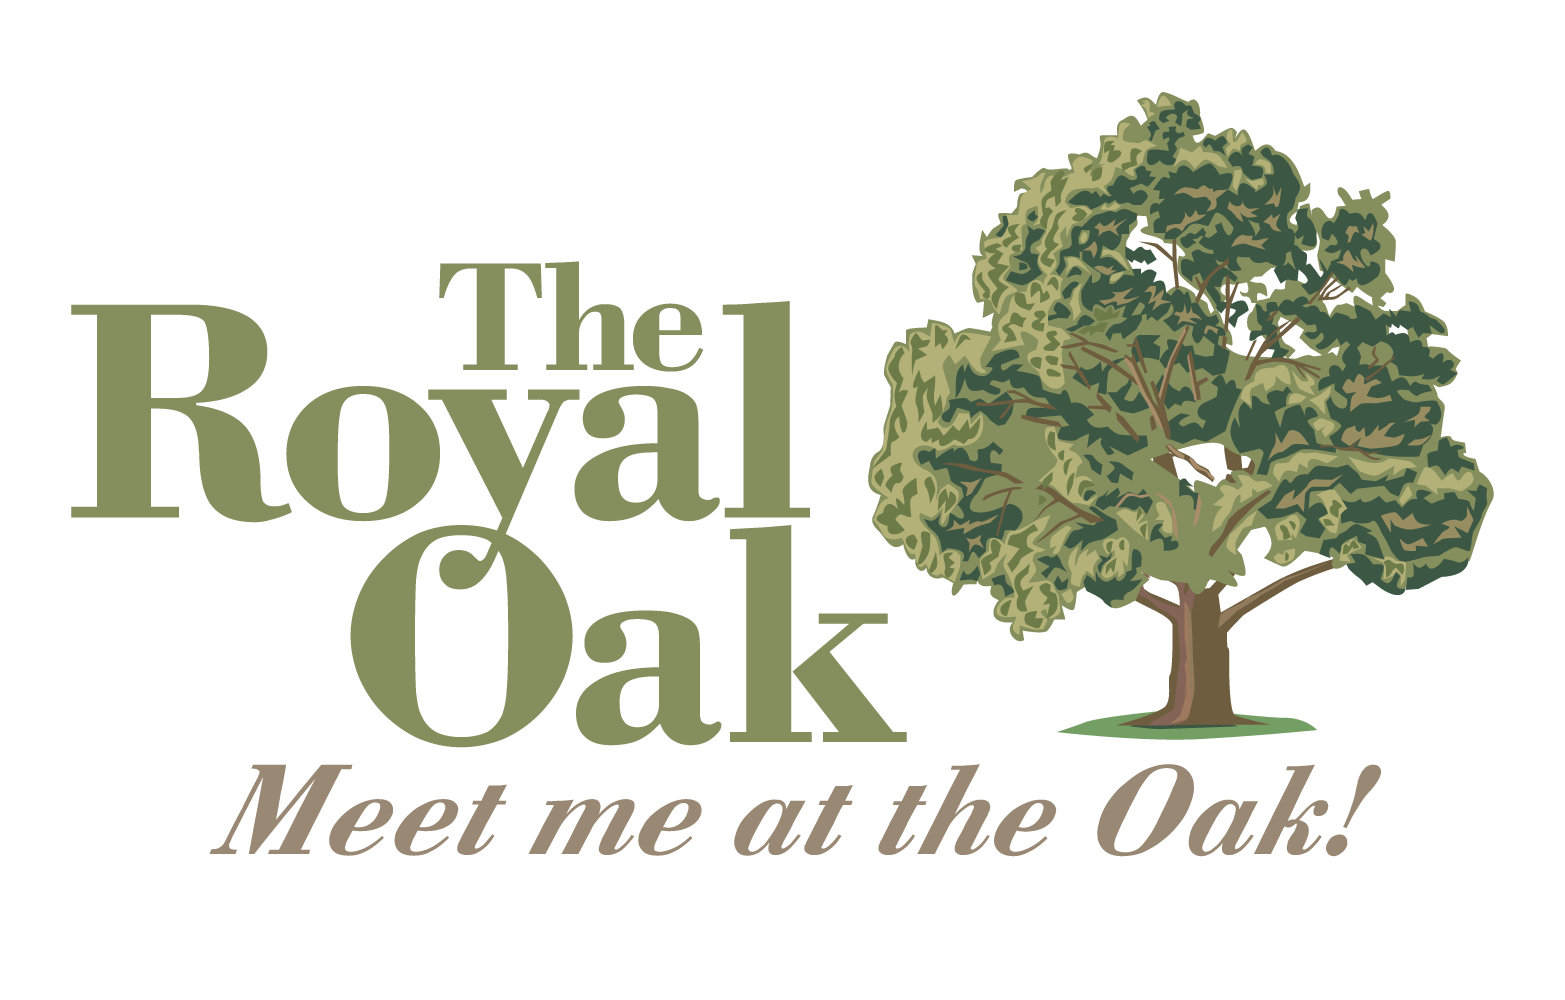 The Royal Oak, 15% off